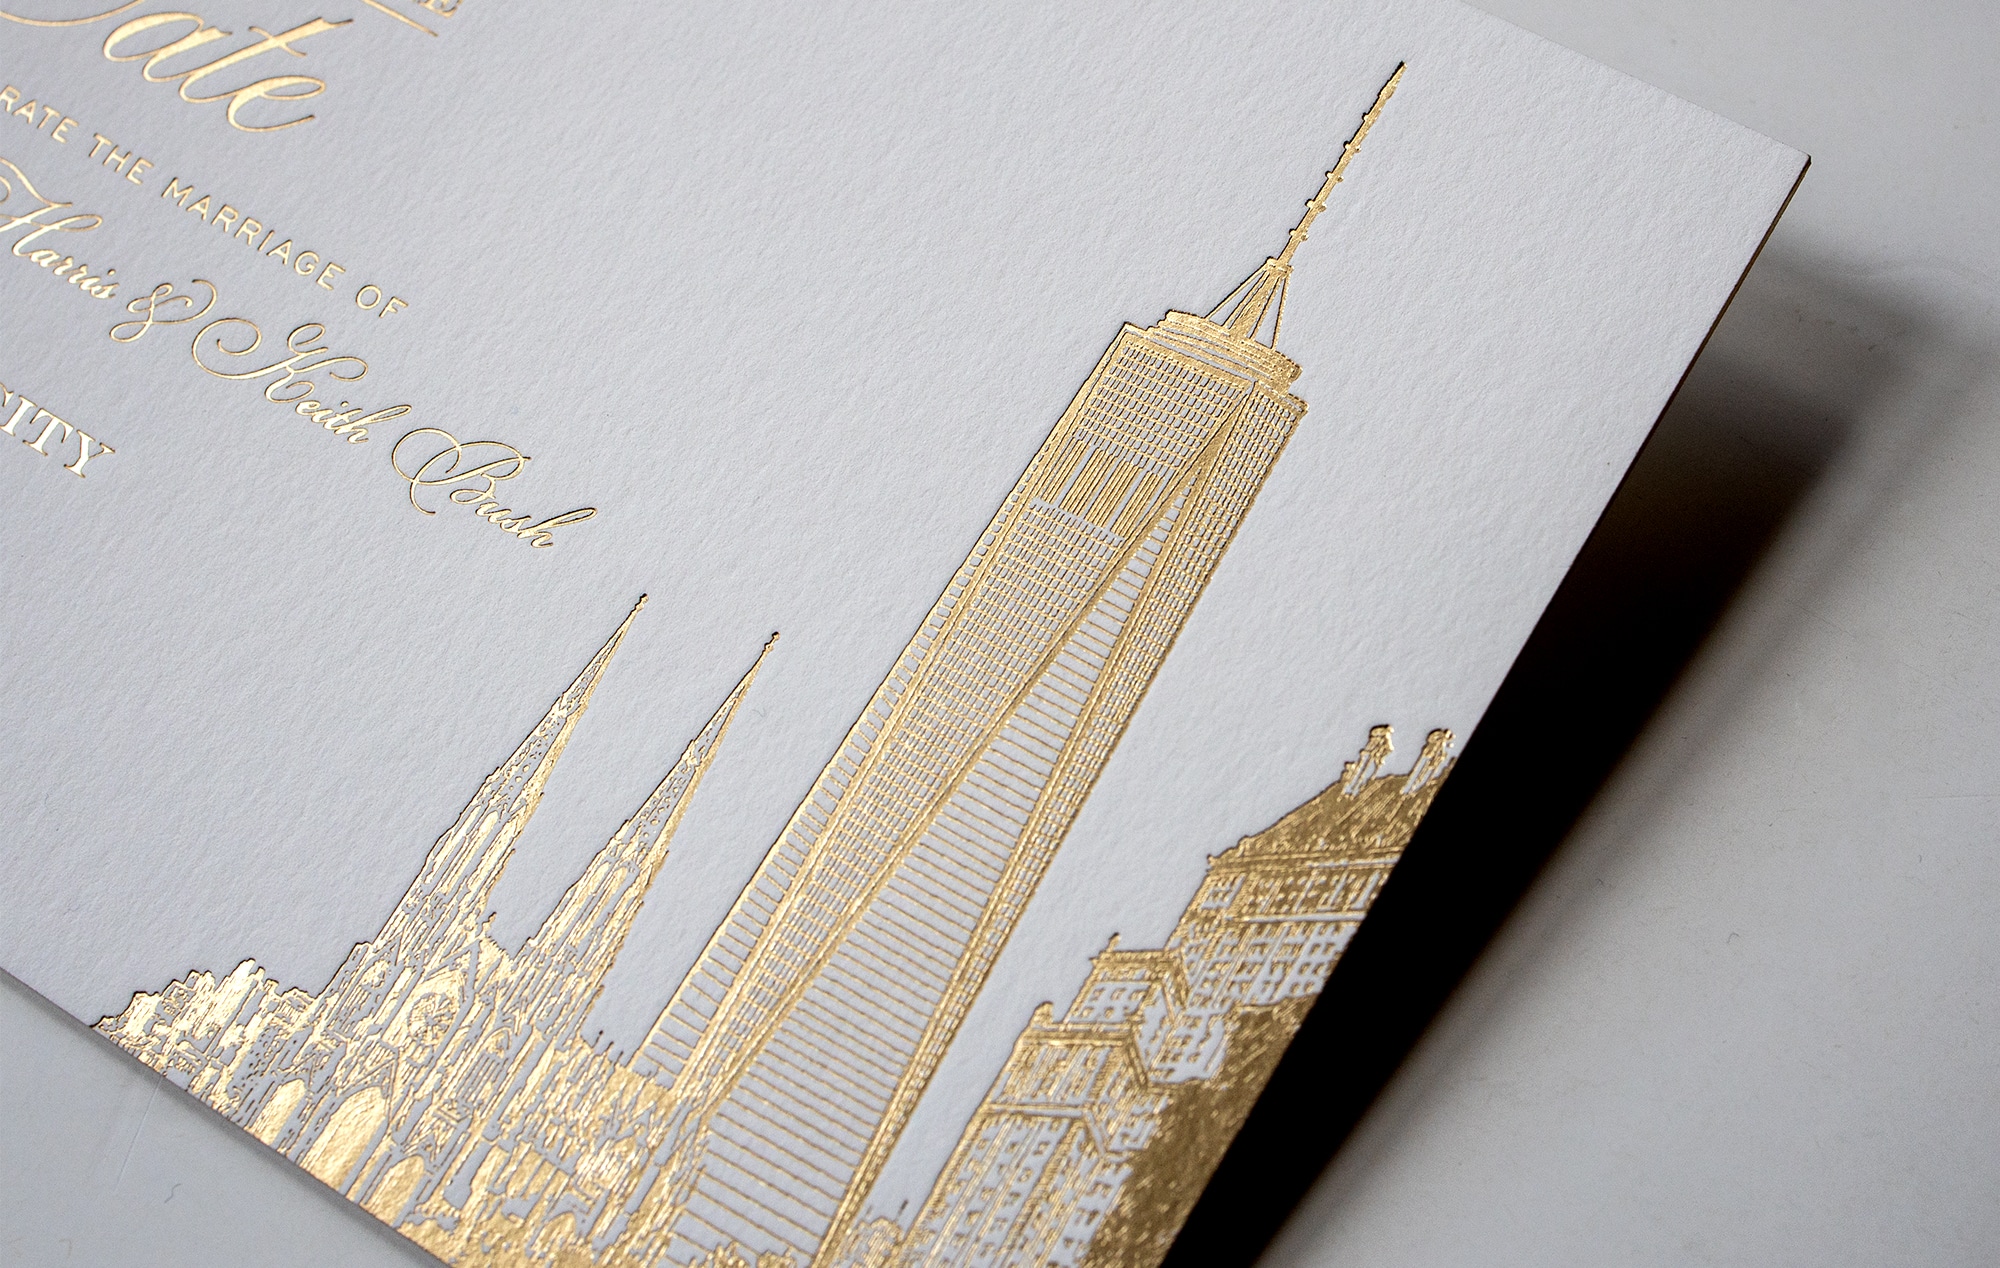 Gold foil illustration of One World Trade Center